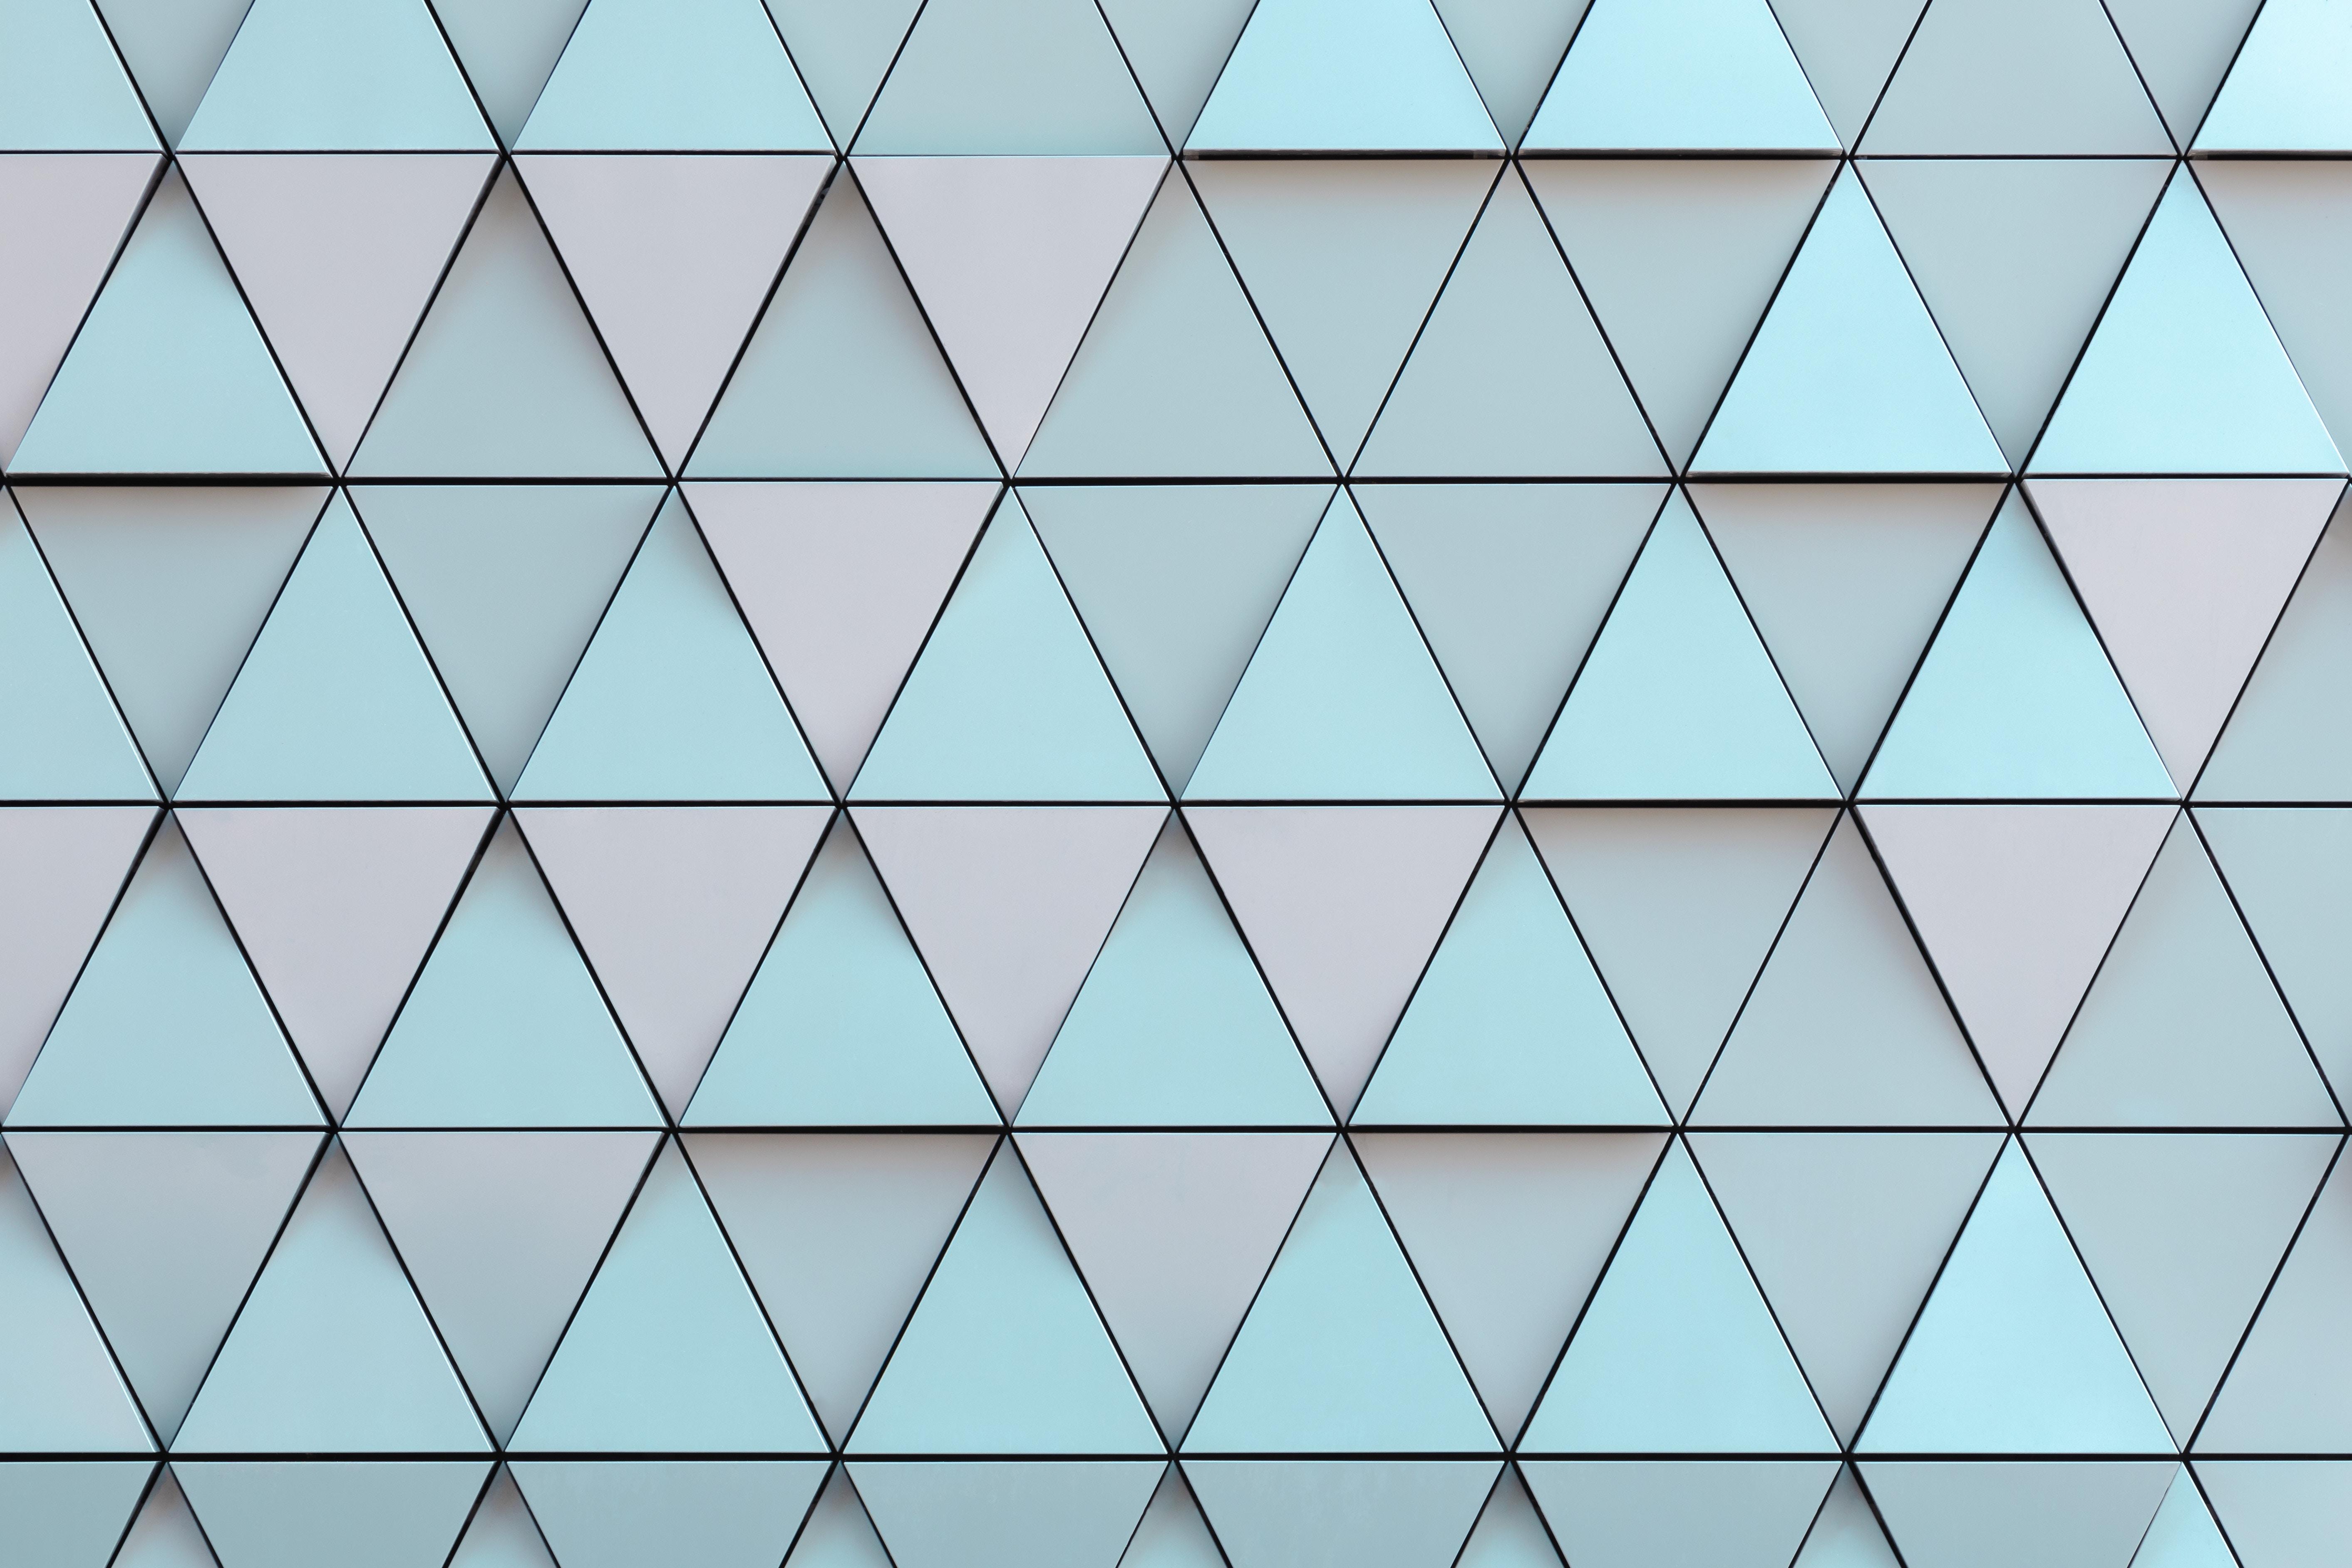 5652x3768 #Free image, #geometry, #pink, #building structure, # minimalist, #diagonal, #architecture, #minimal wallpaper, #surface, #color, #minimal, #horizontal, #line, #triangle, #wall, #minimal geometrical shape, #blue, #pattern. Mocah.org